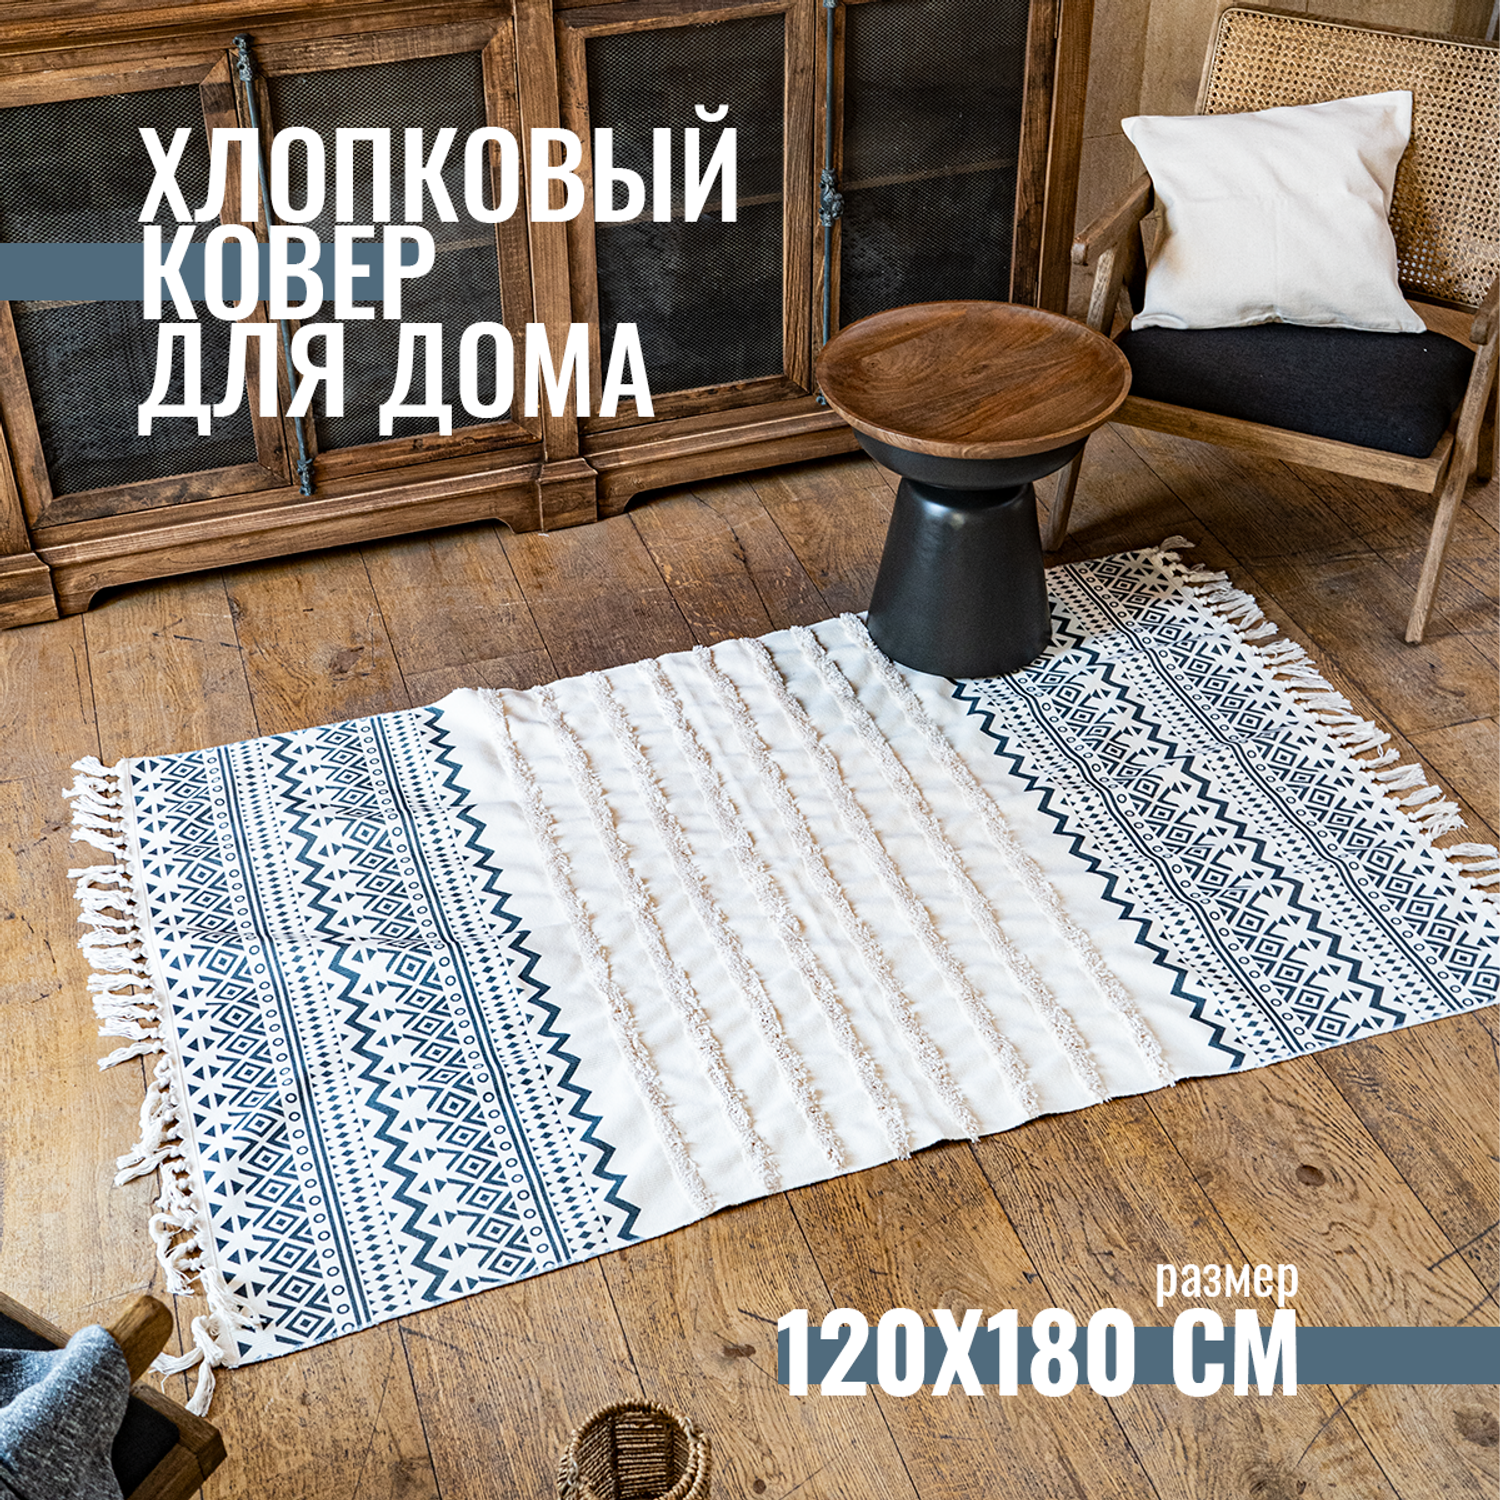 Хлопковый коврик Homfox для дома 120x180 см - фото 1